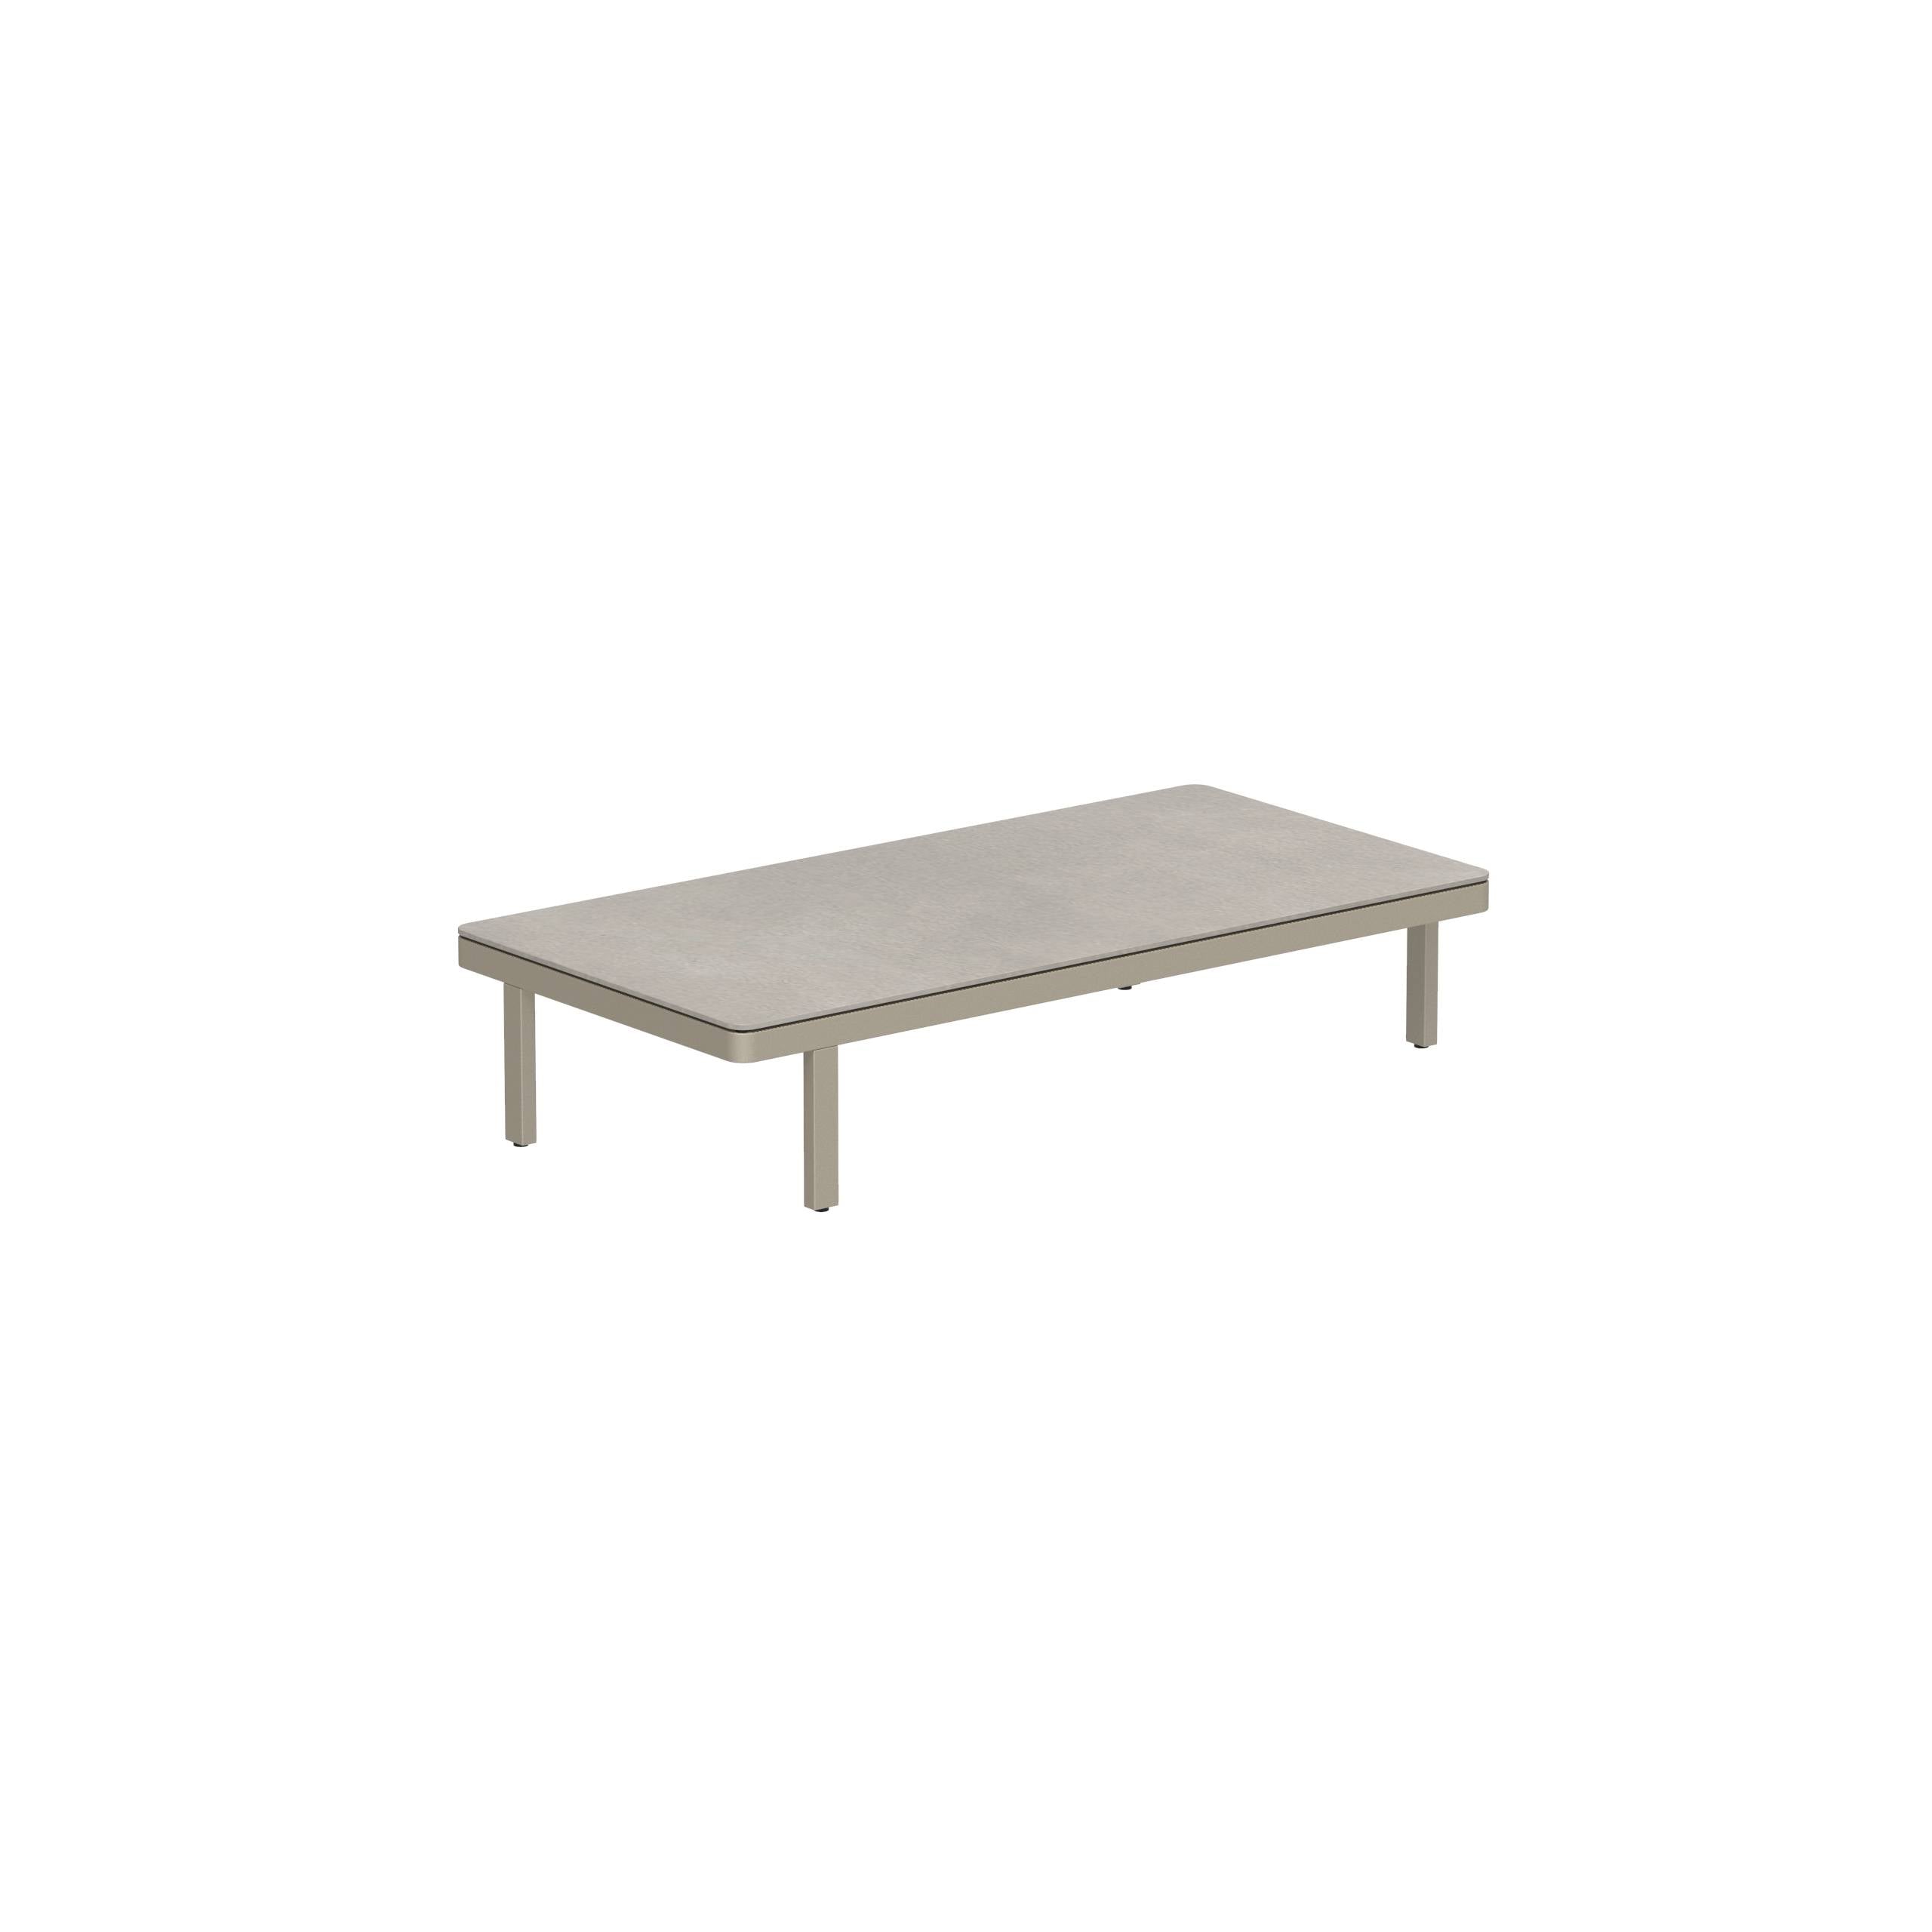 Alura Lounge 160 Lth Table 160x80x34cm Sand Ceramic Tabletop Cemento Luminoso